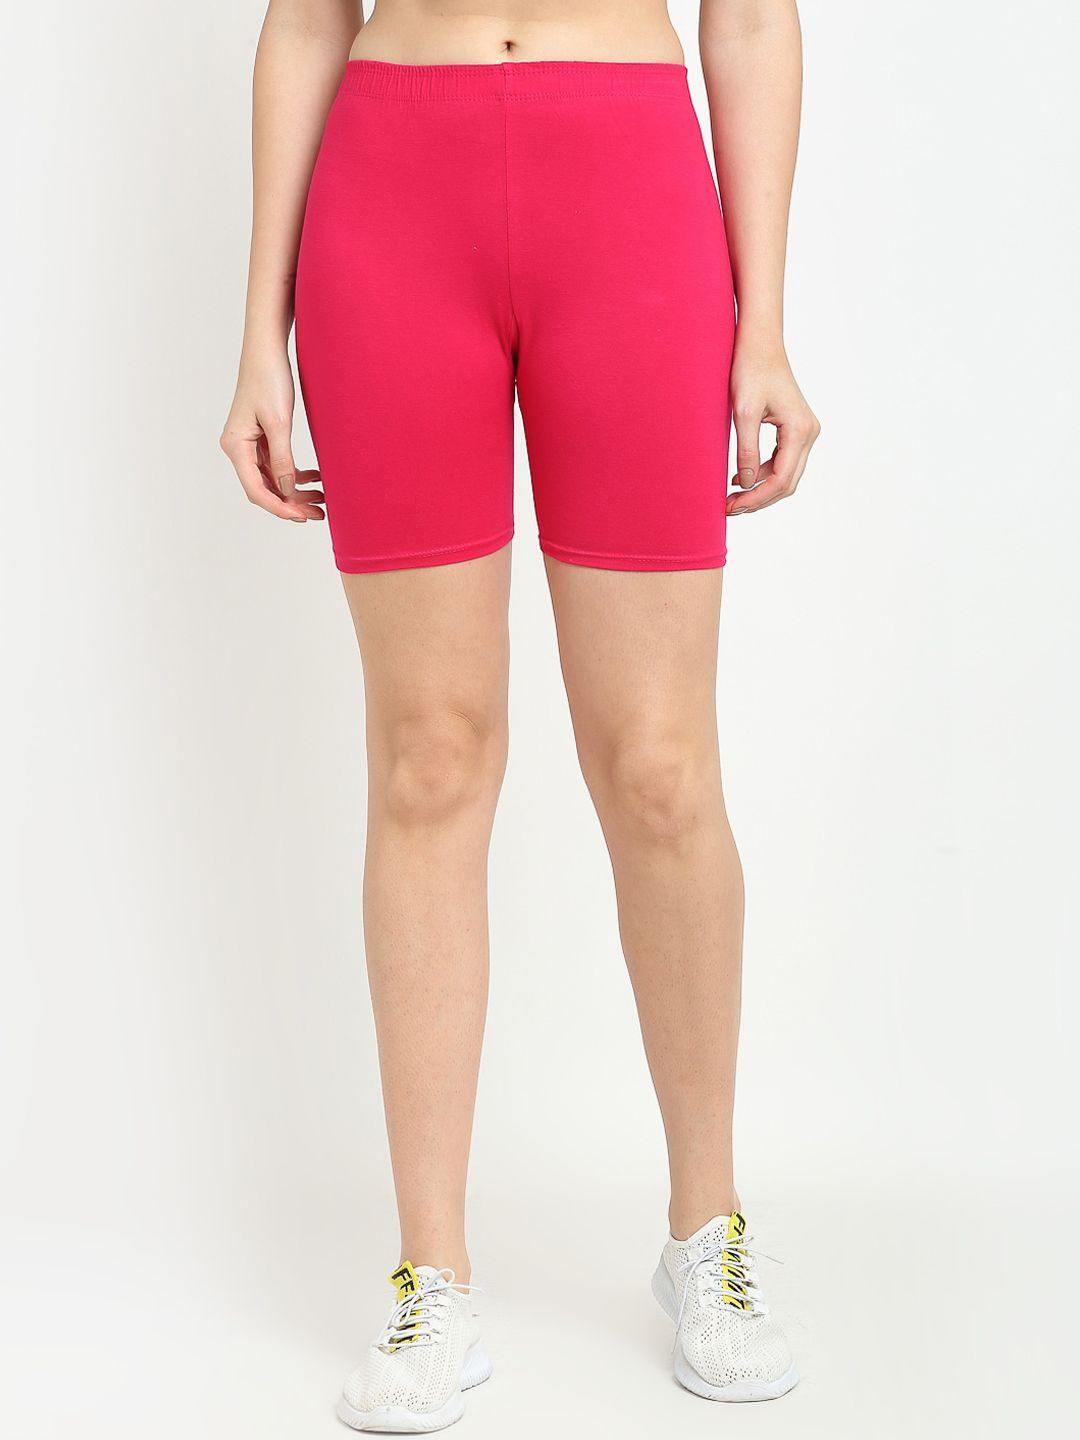 GRACIT Women Pink Sports Shorts